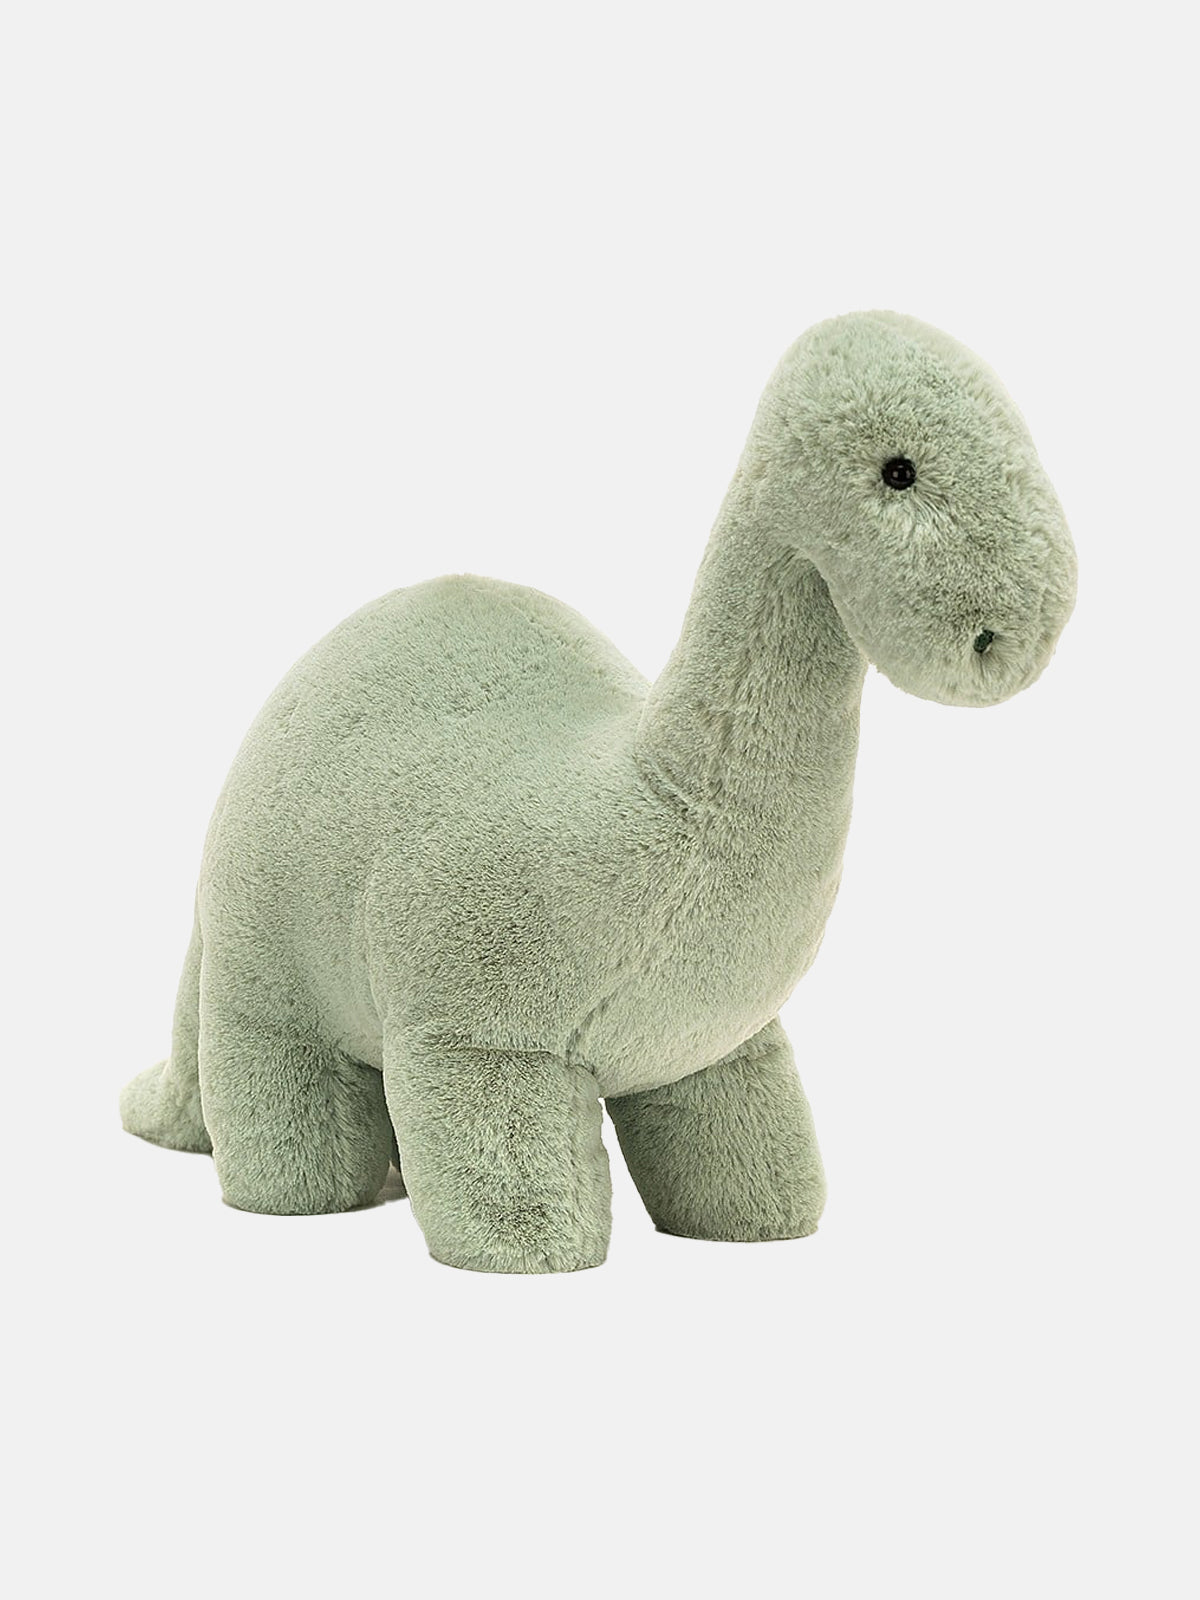 "Fossilly" Brontosaurus Plush Toy